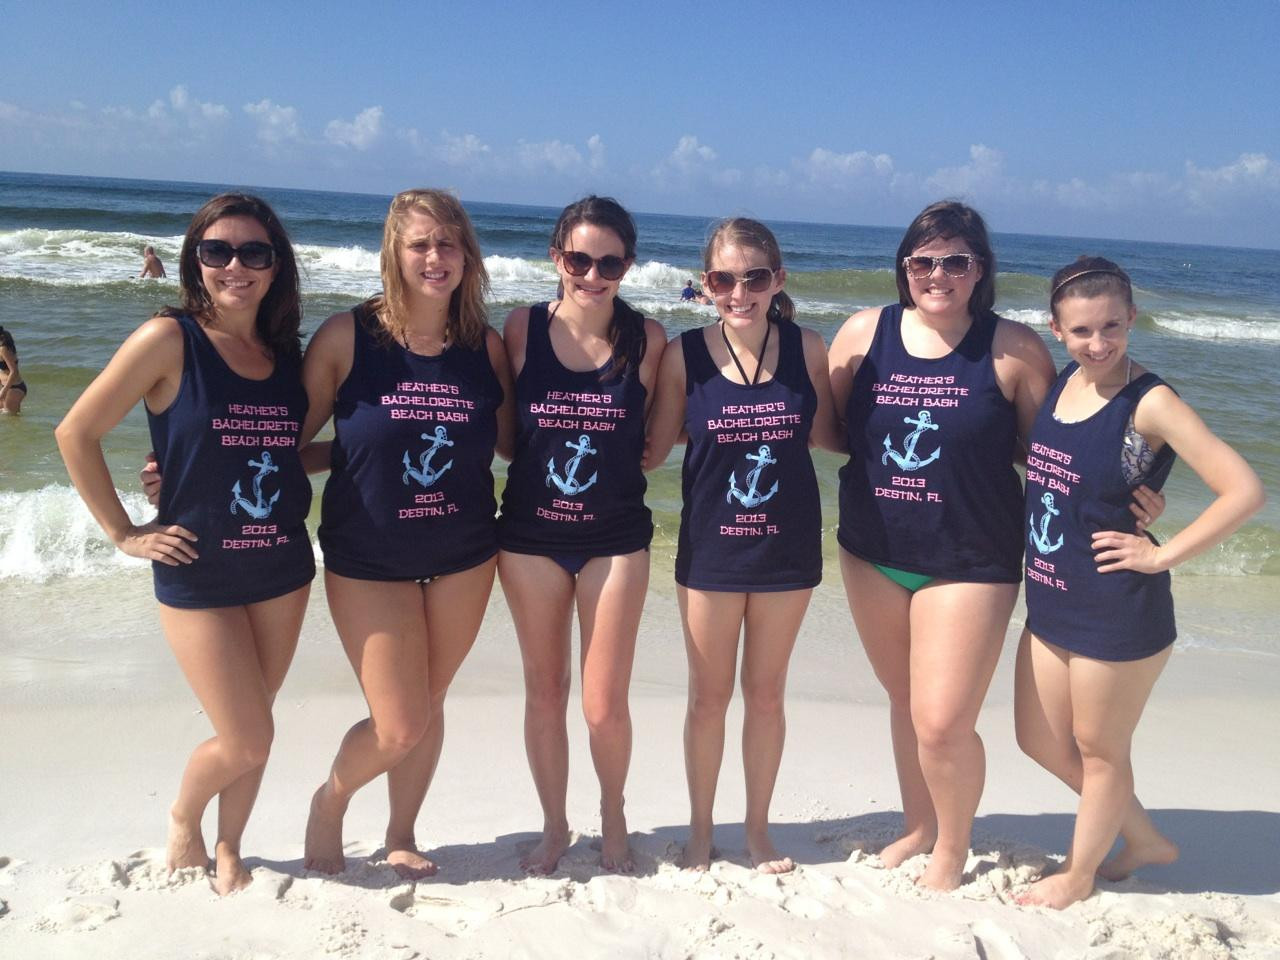 Bachelorette Party Ideas Virginia Beach
 Custom T Shirts for Bachelorette Beach Bash Shirt Design